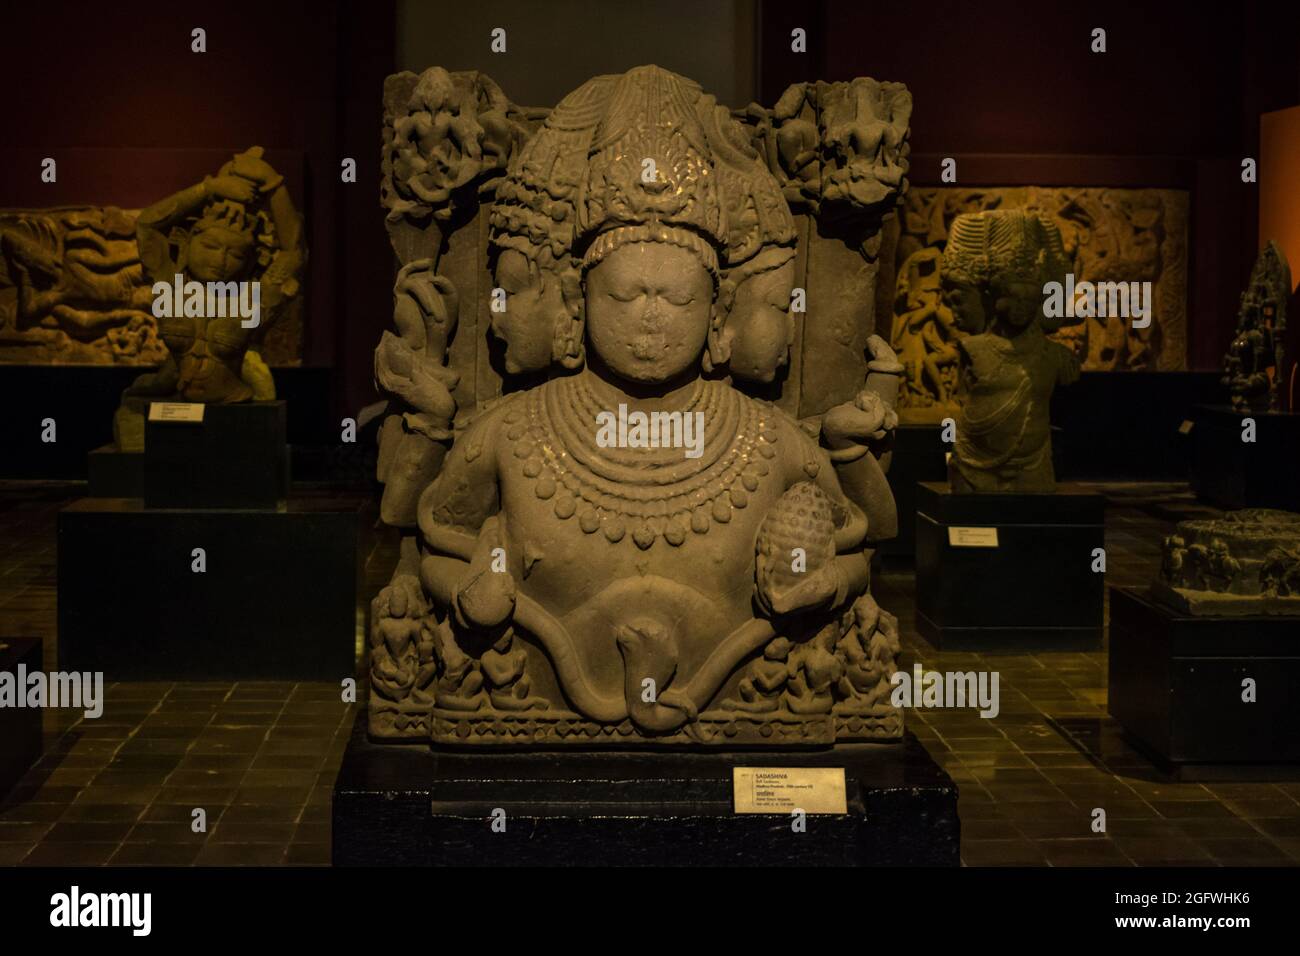 Statues of Hindu deities at the Sculpture Gallery of Chhatrapati Shivaji Maharaj Vastu Sangrahalaya or Prince of Wales Museum in Mumbai, India Stock Photo